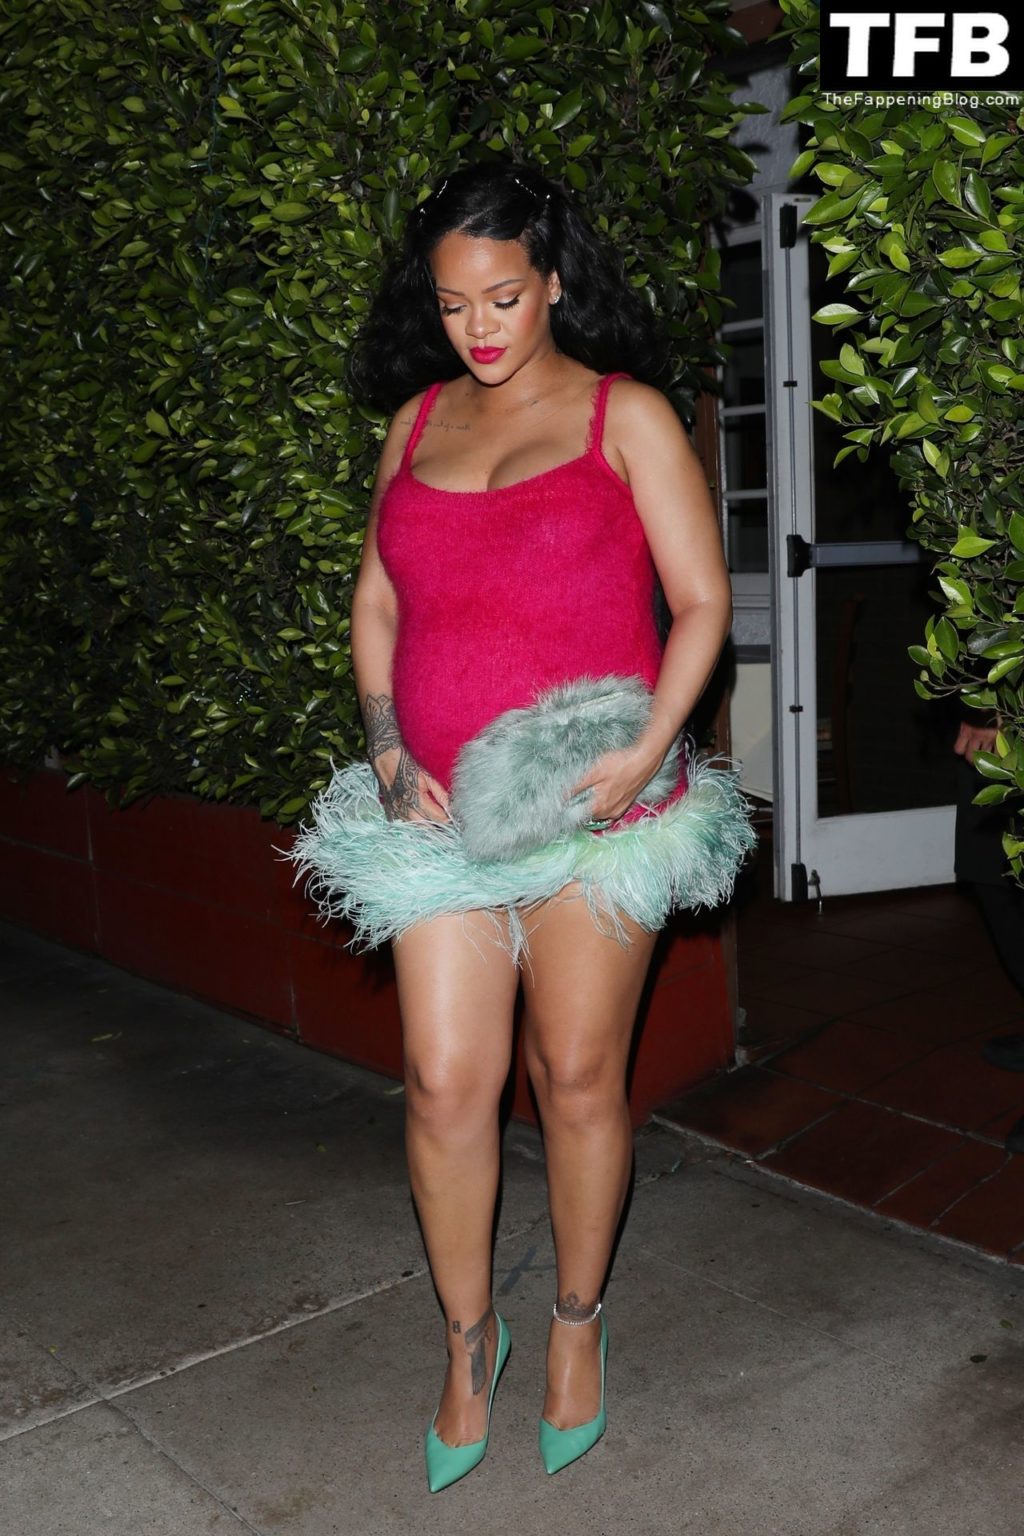 Rihanna Sexy The Fappening Blog 71 1024x1536 - Rihanna Puts Her Baby Bump on Display Grabbing Dinner at Giorgio Baldi (100 Photos)